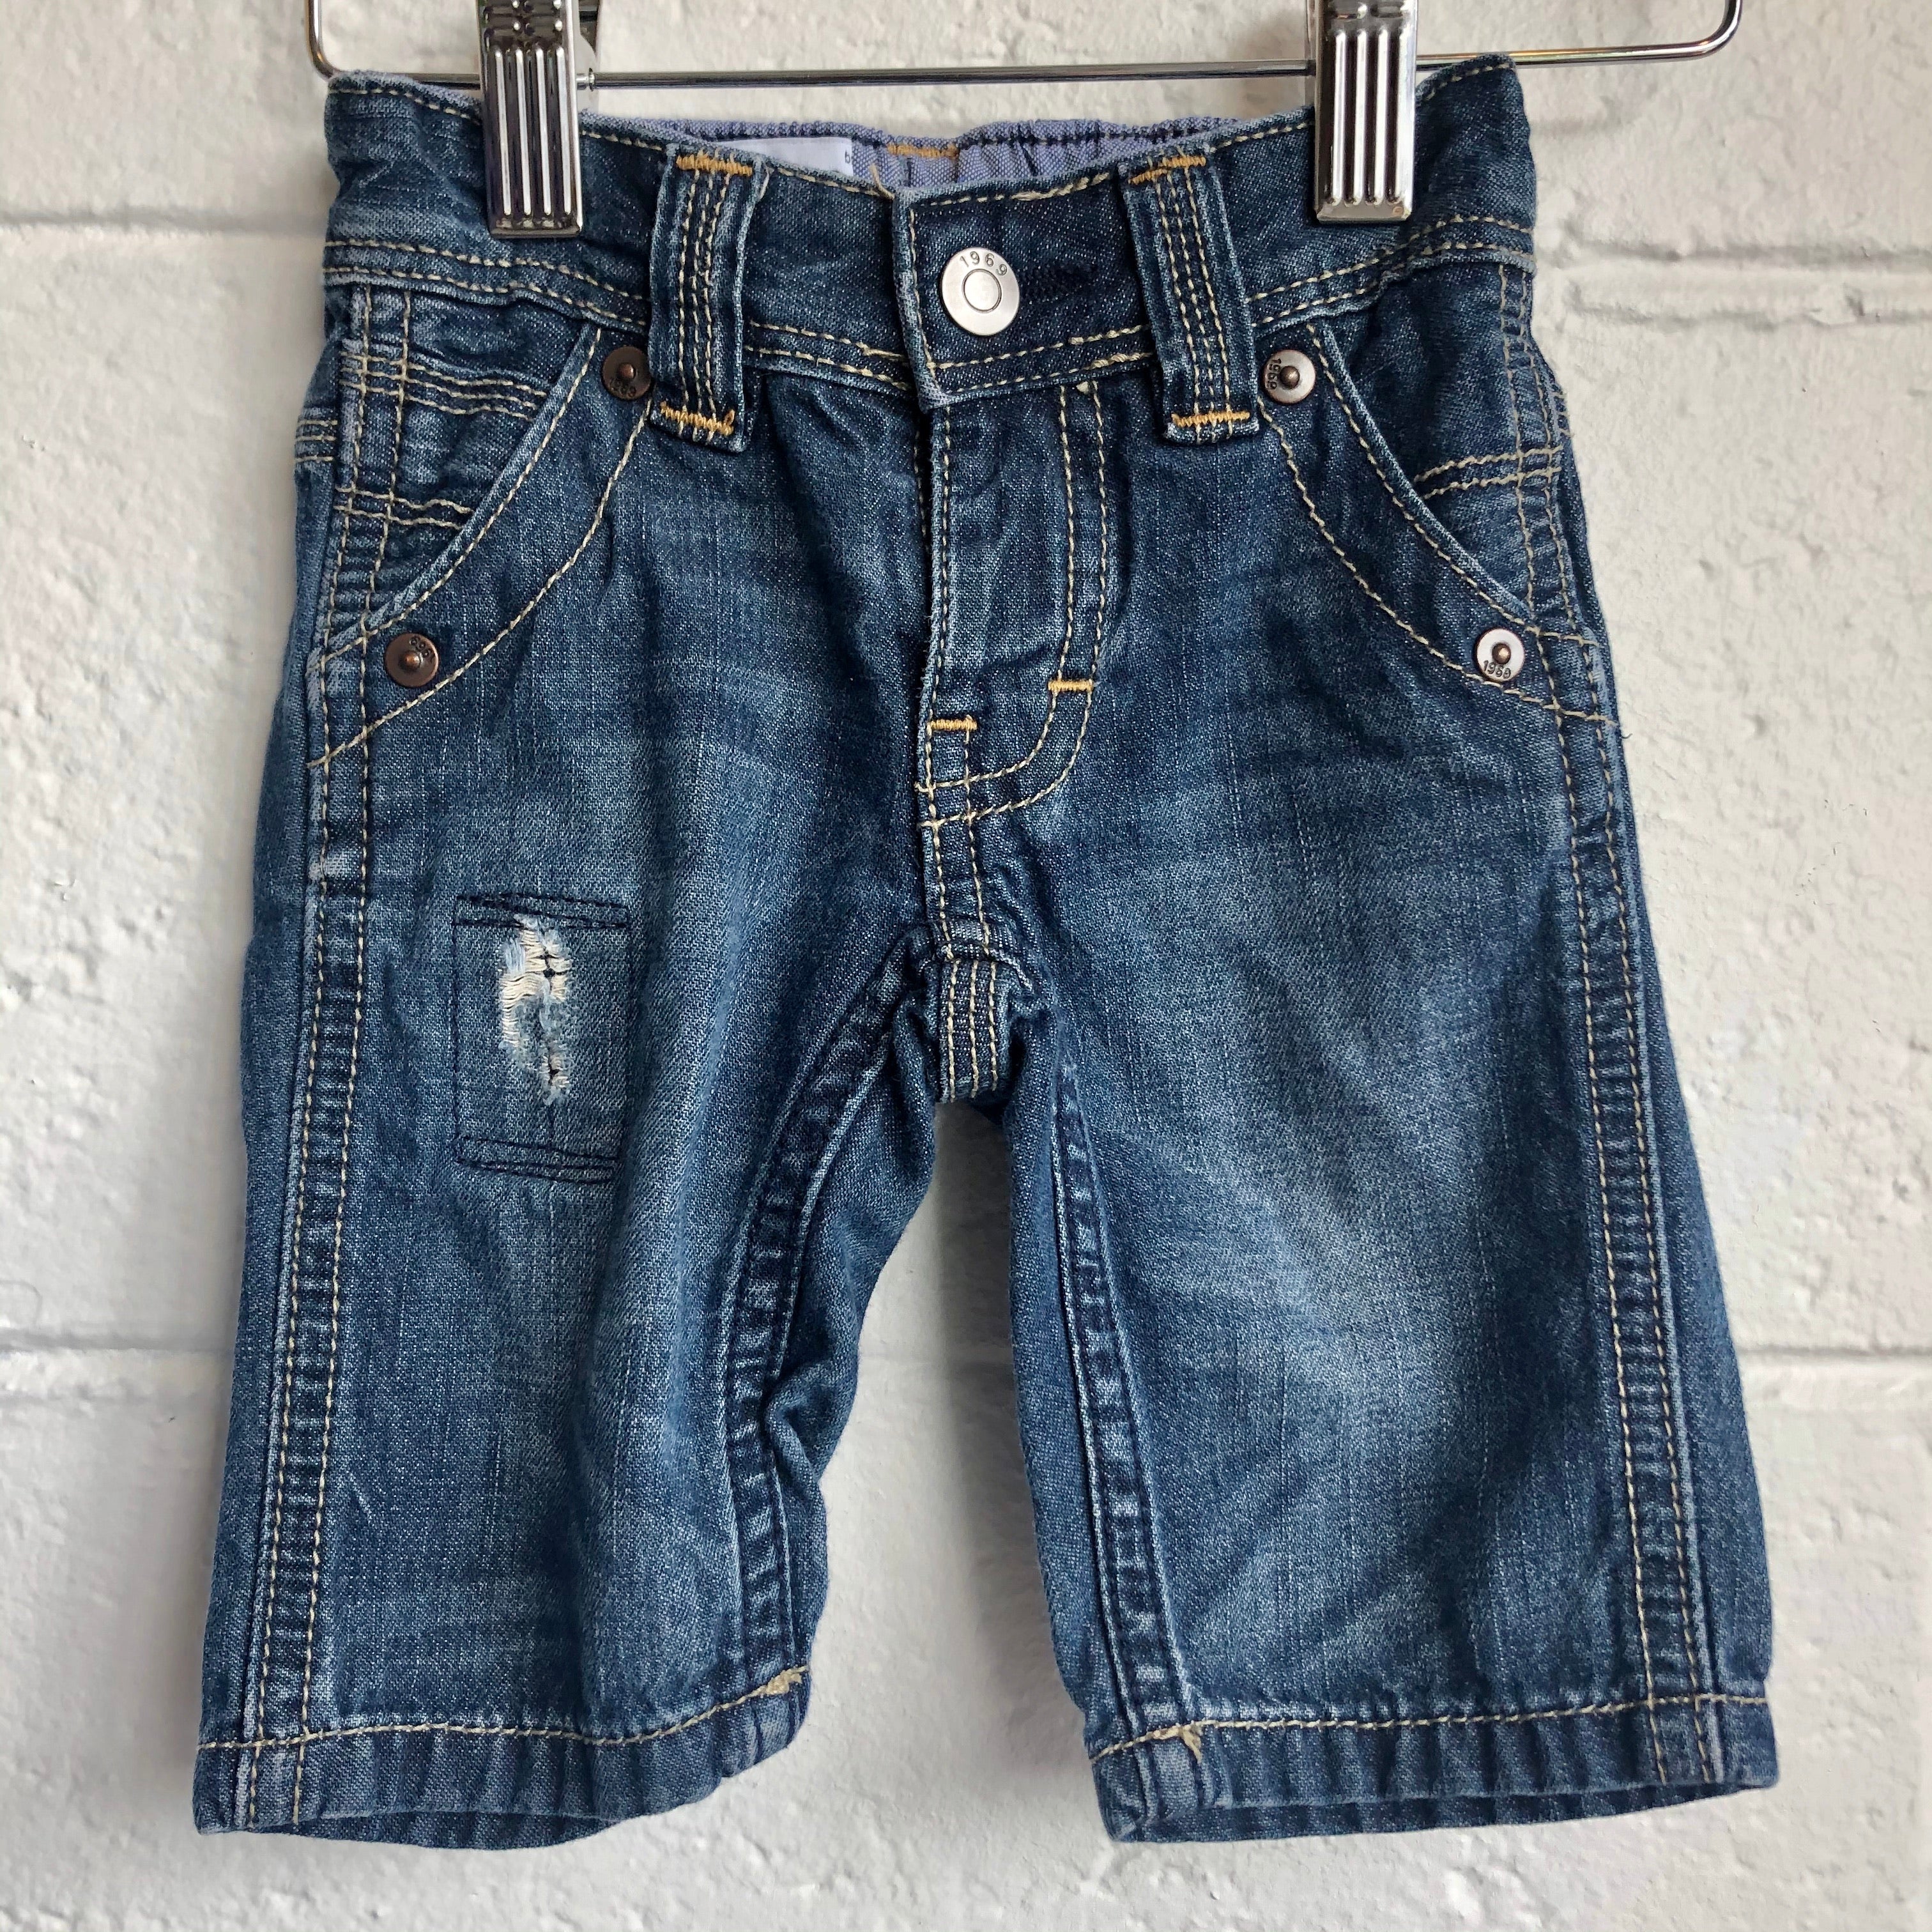 0-3M Baby Gap Jeans